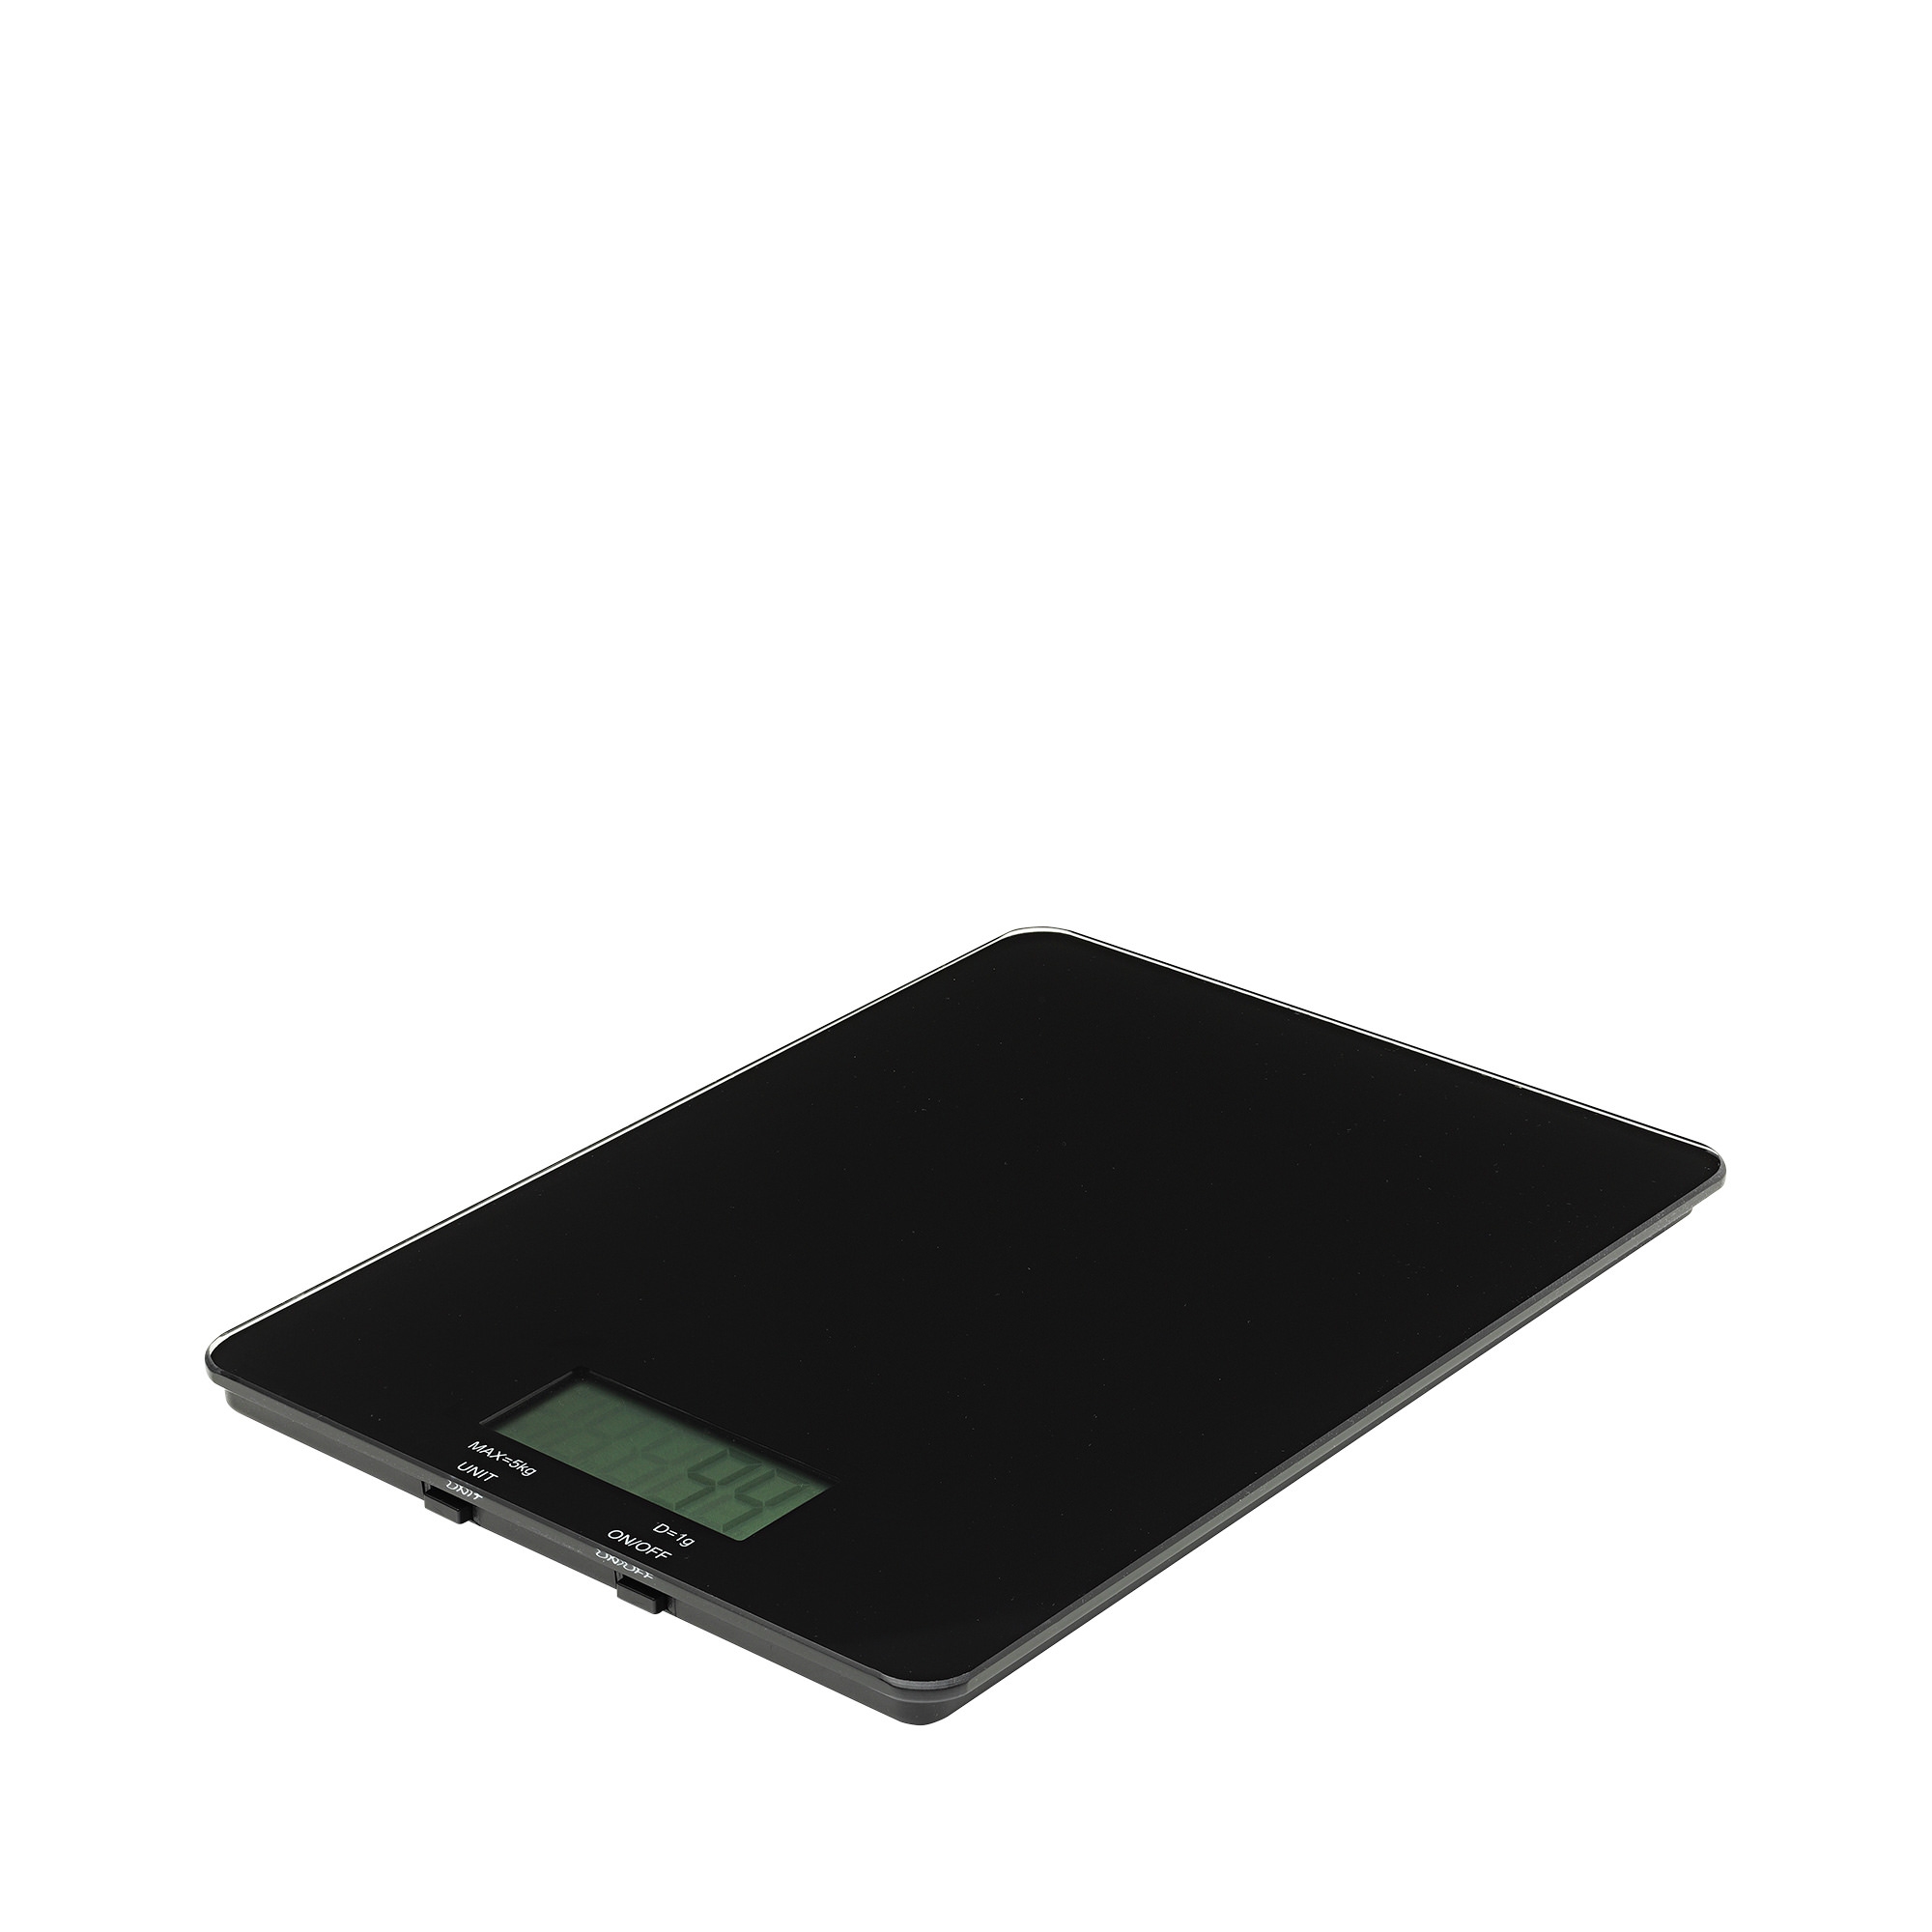 Avanti Digital Kitchen Scales 5kg Black Image 1